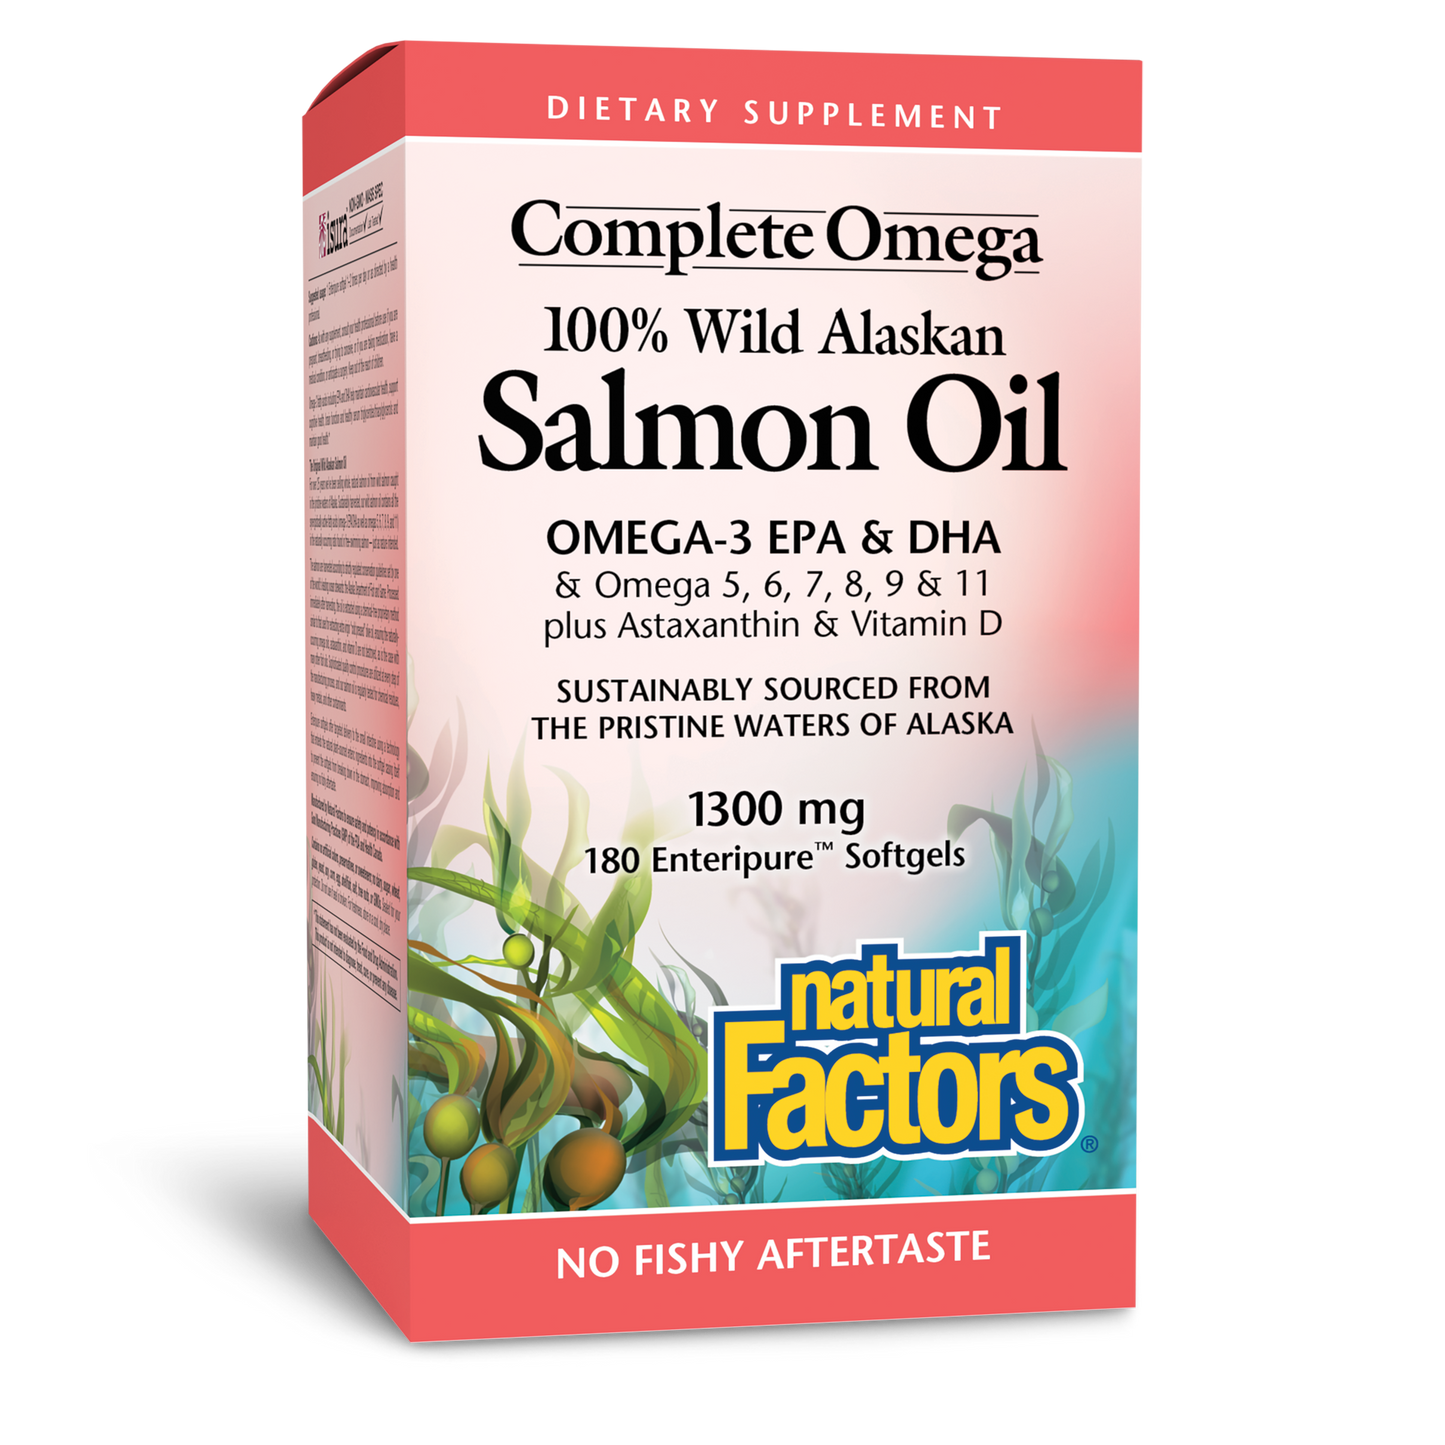 Complete Omega 100% Wild Alaskan Salmon Oil|variant|hi-res|2266U